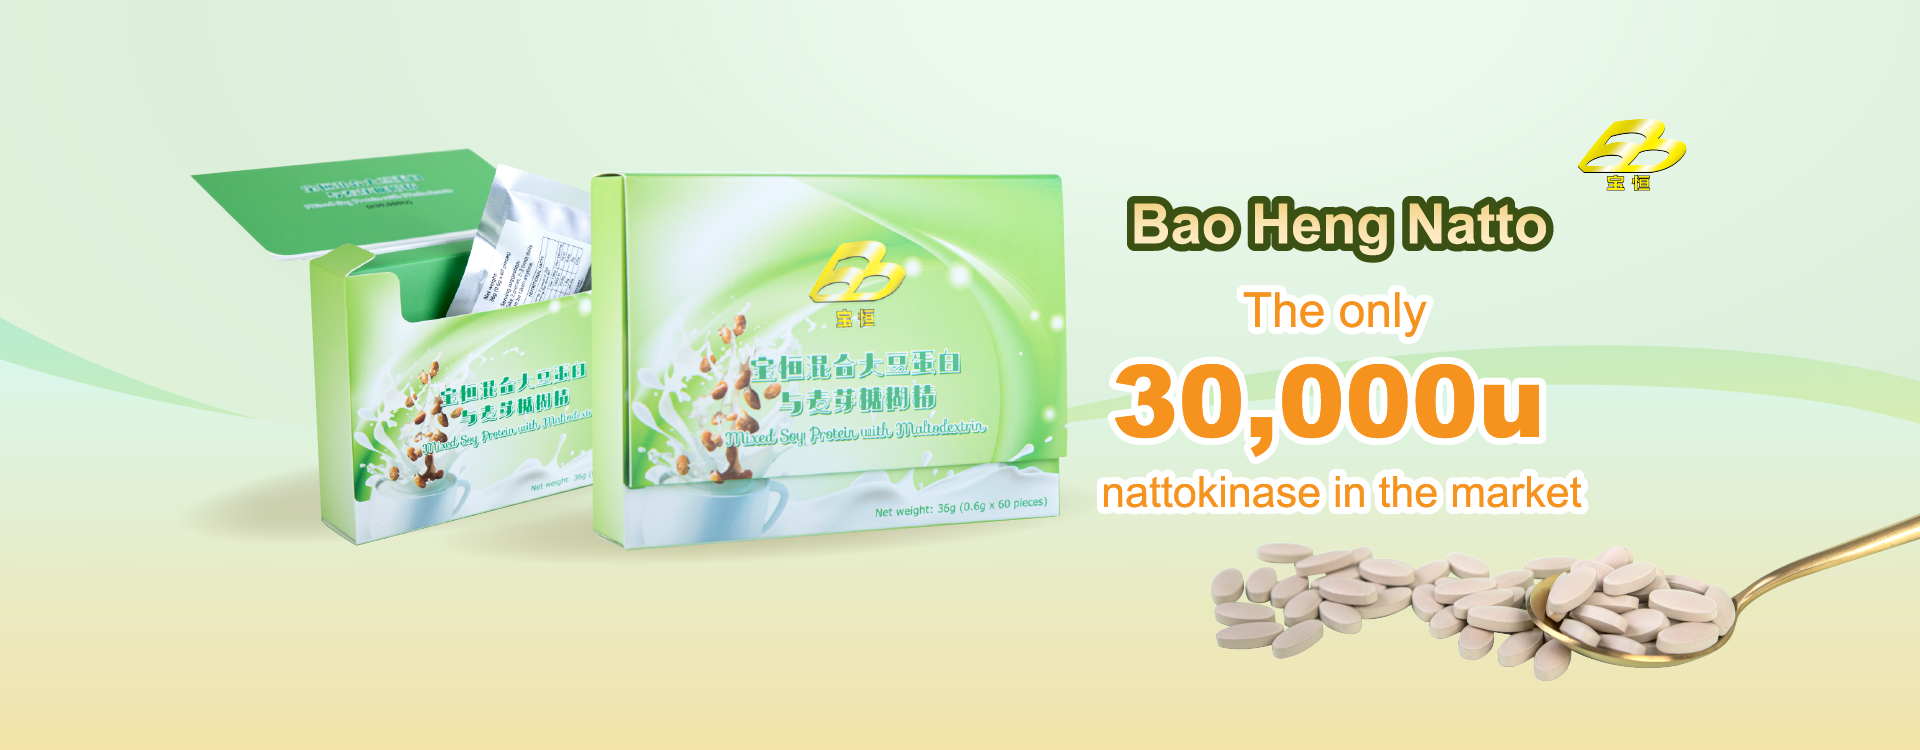 Bao Heng Natto